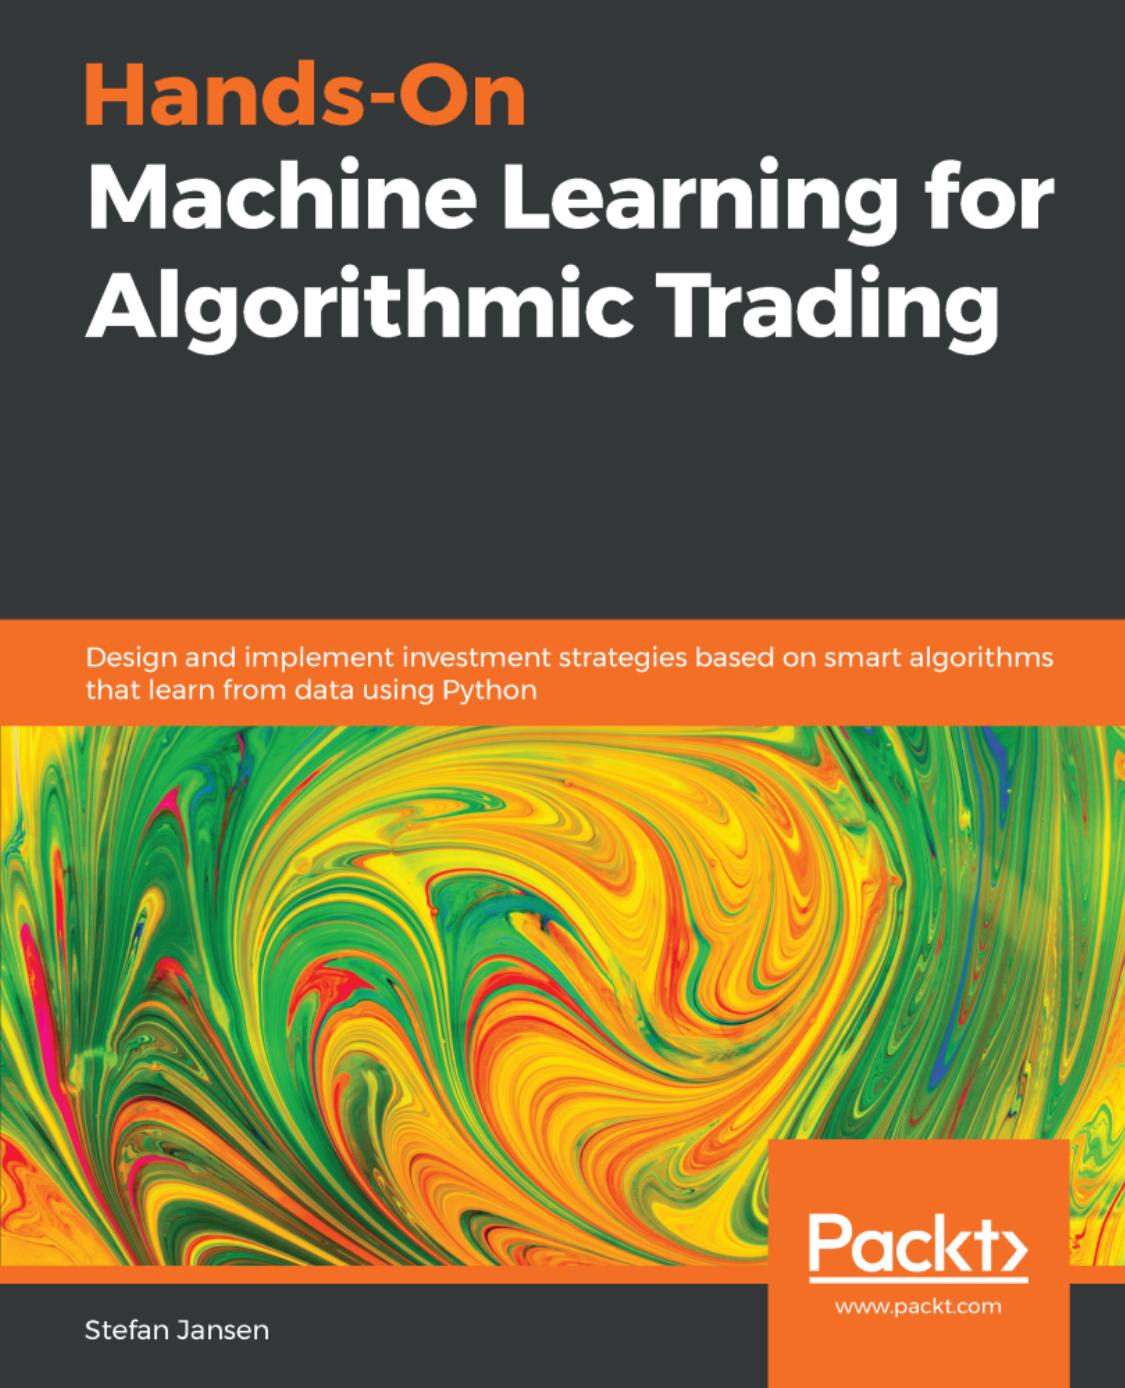 Hands-On Machine Learning for Algorithmic Trading by Stefan Jansen